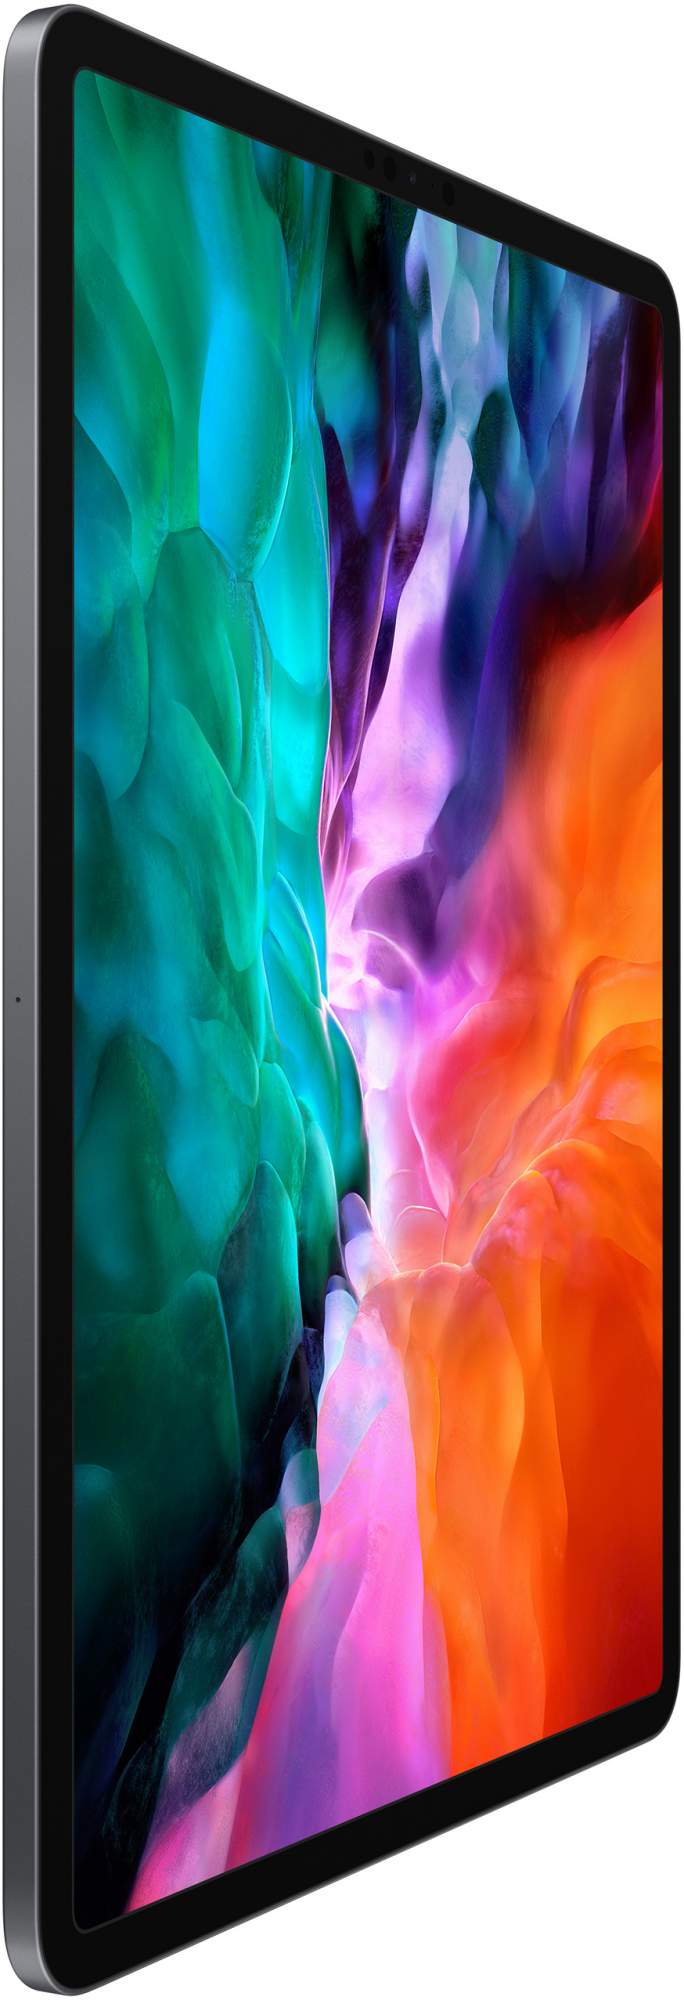 Планшет Apple iPad Pro 12.9 (2020) 512GB Wi-Fi + Cellular Space Grey (MXF72RU/A)